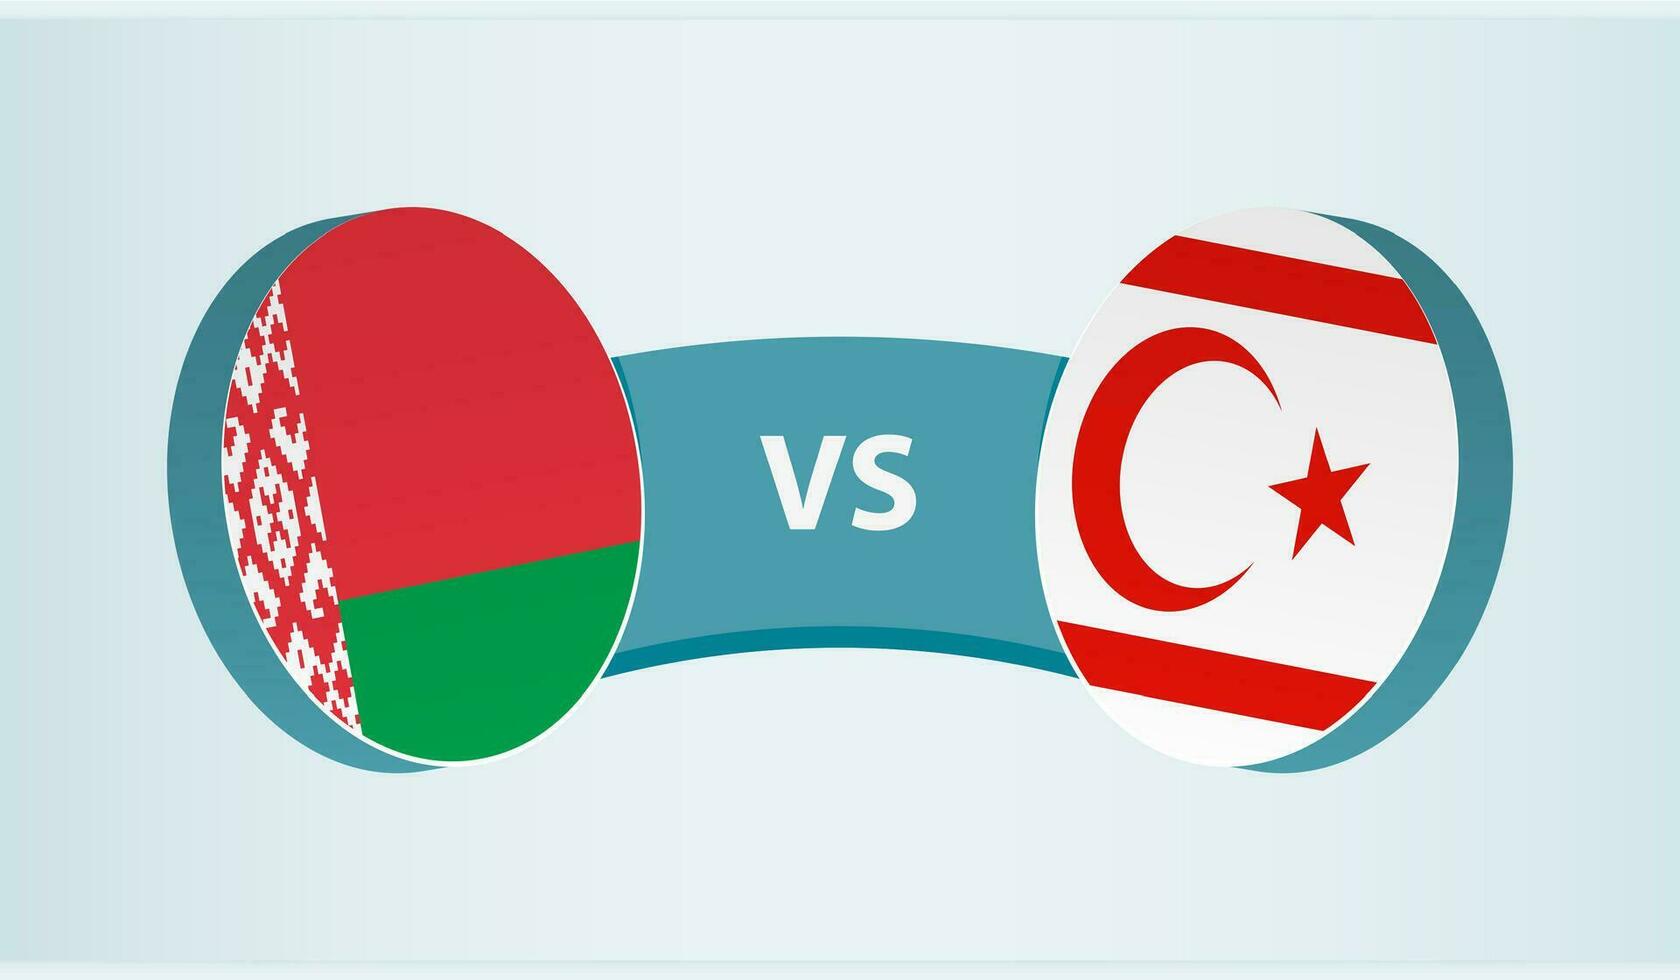 bielorrússia versus norte Chipre, equipe Esportes concorrência conceito. vetor